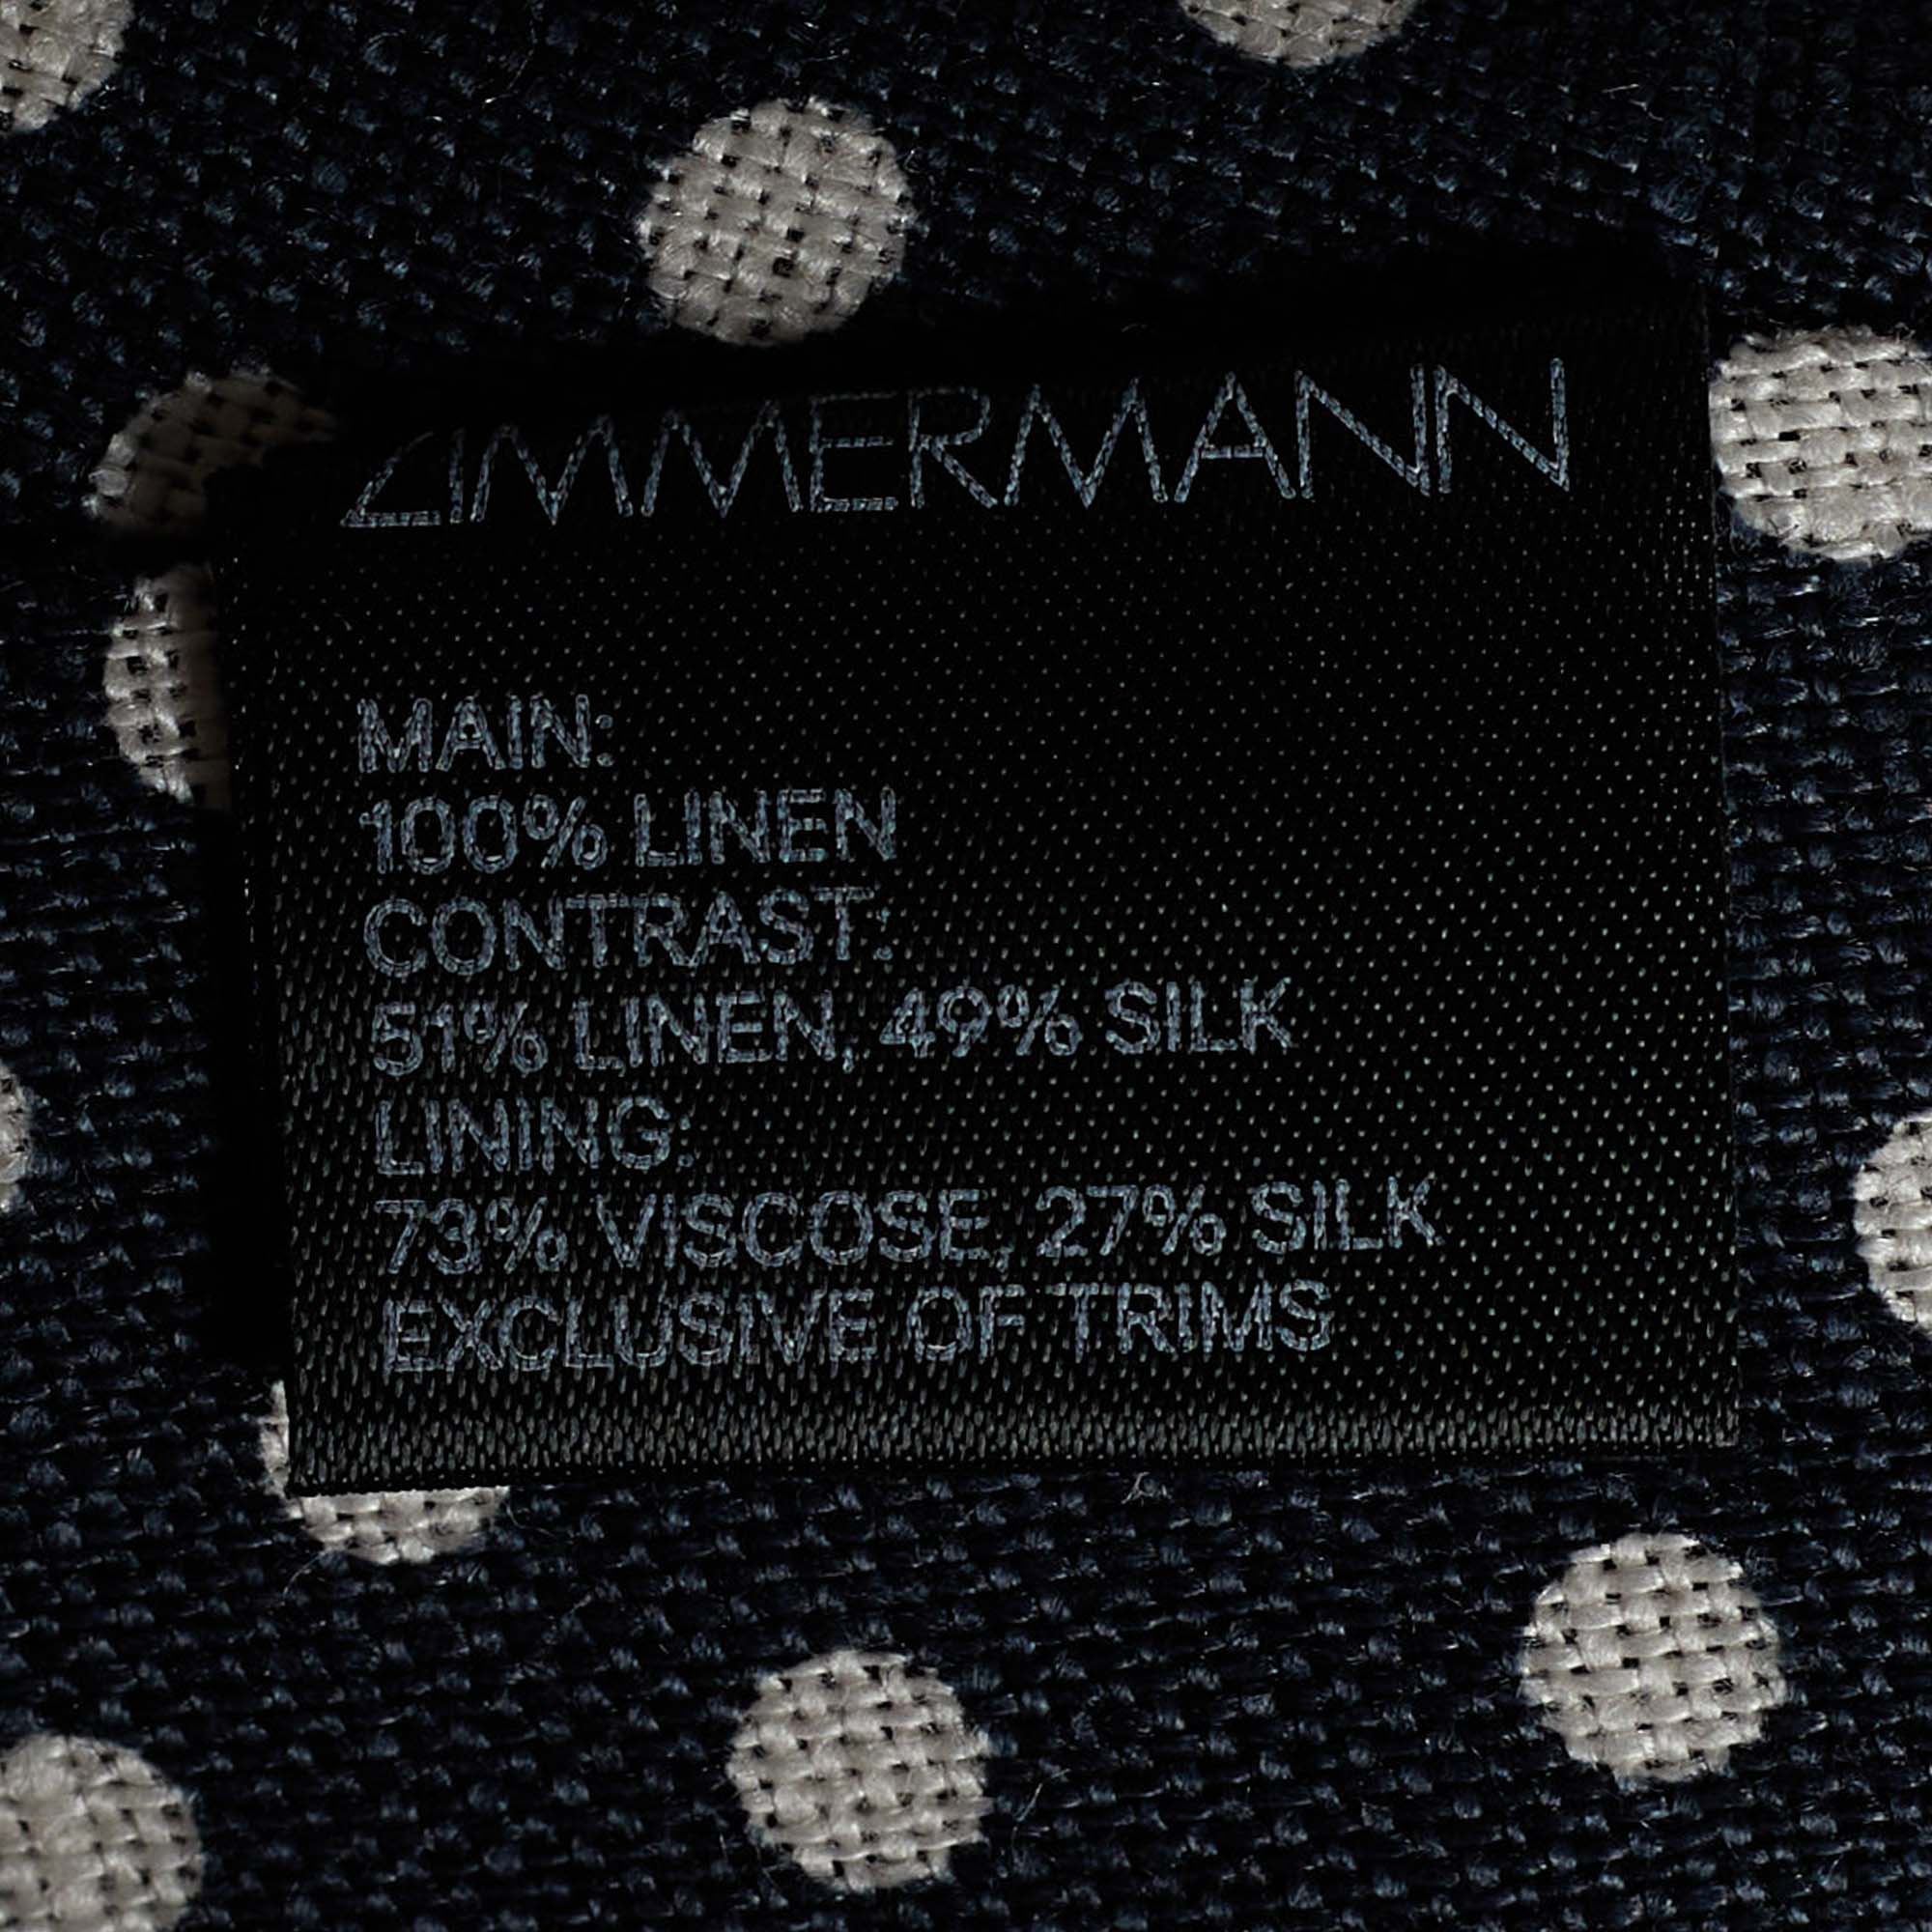 Zimmermann Black Polka Dot Printed Linen Ruffled Crop Top M